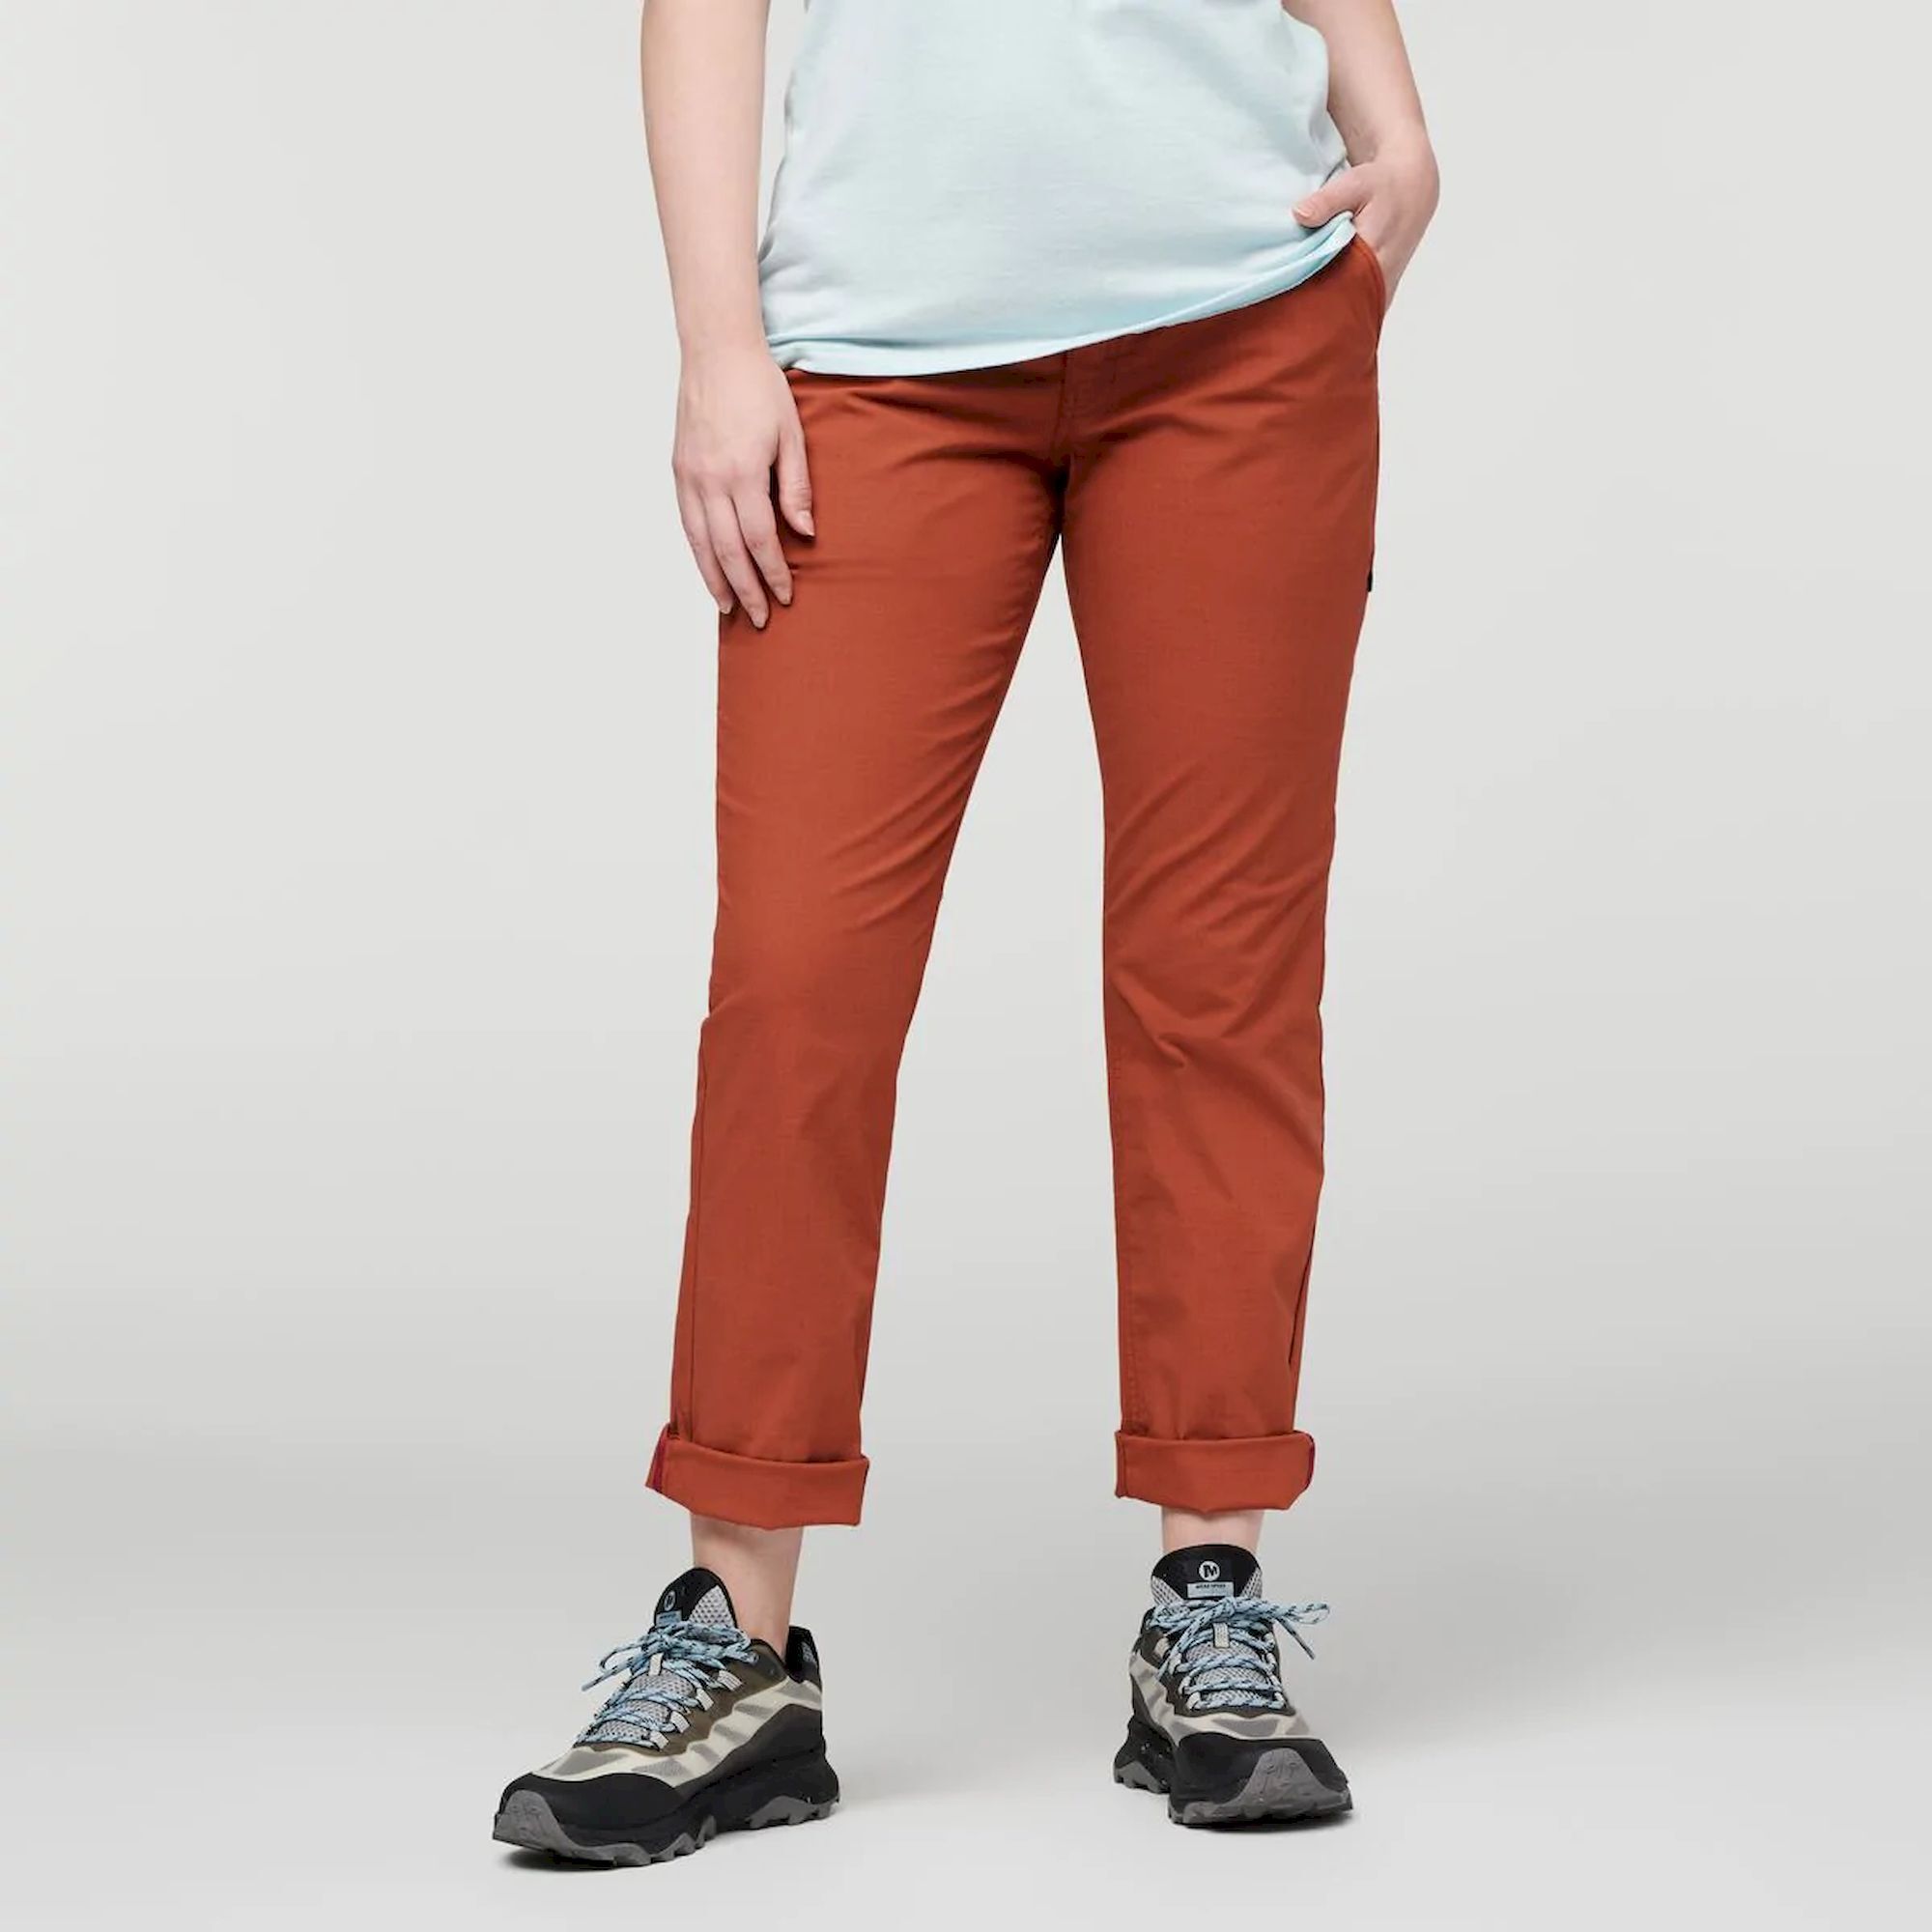 Cotopaxi Salto Ripstop Pant - Walking trousers - Women's | Hardloop